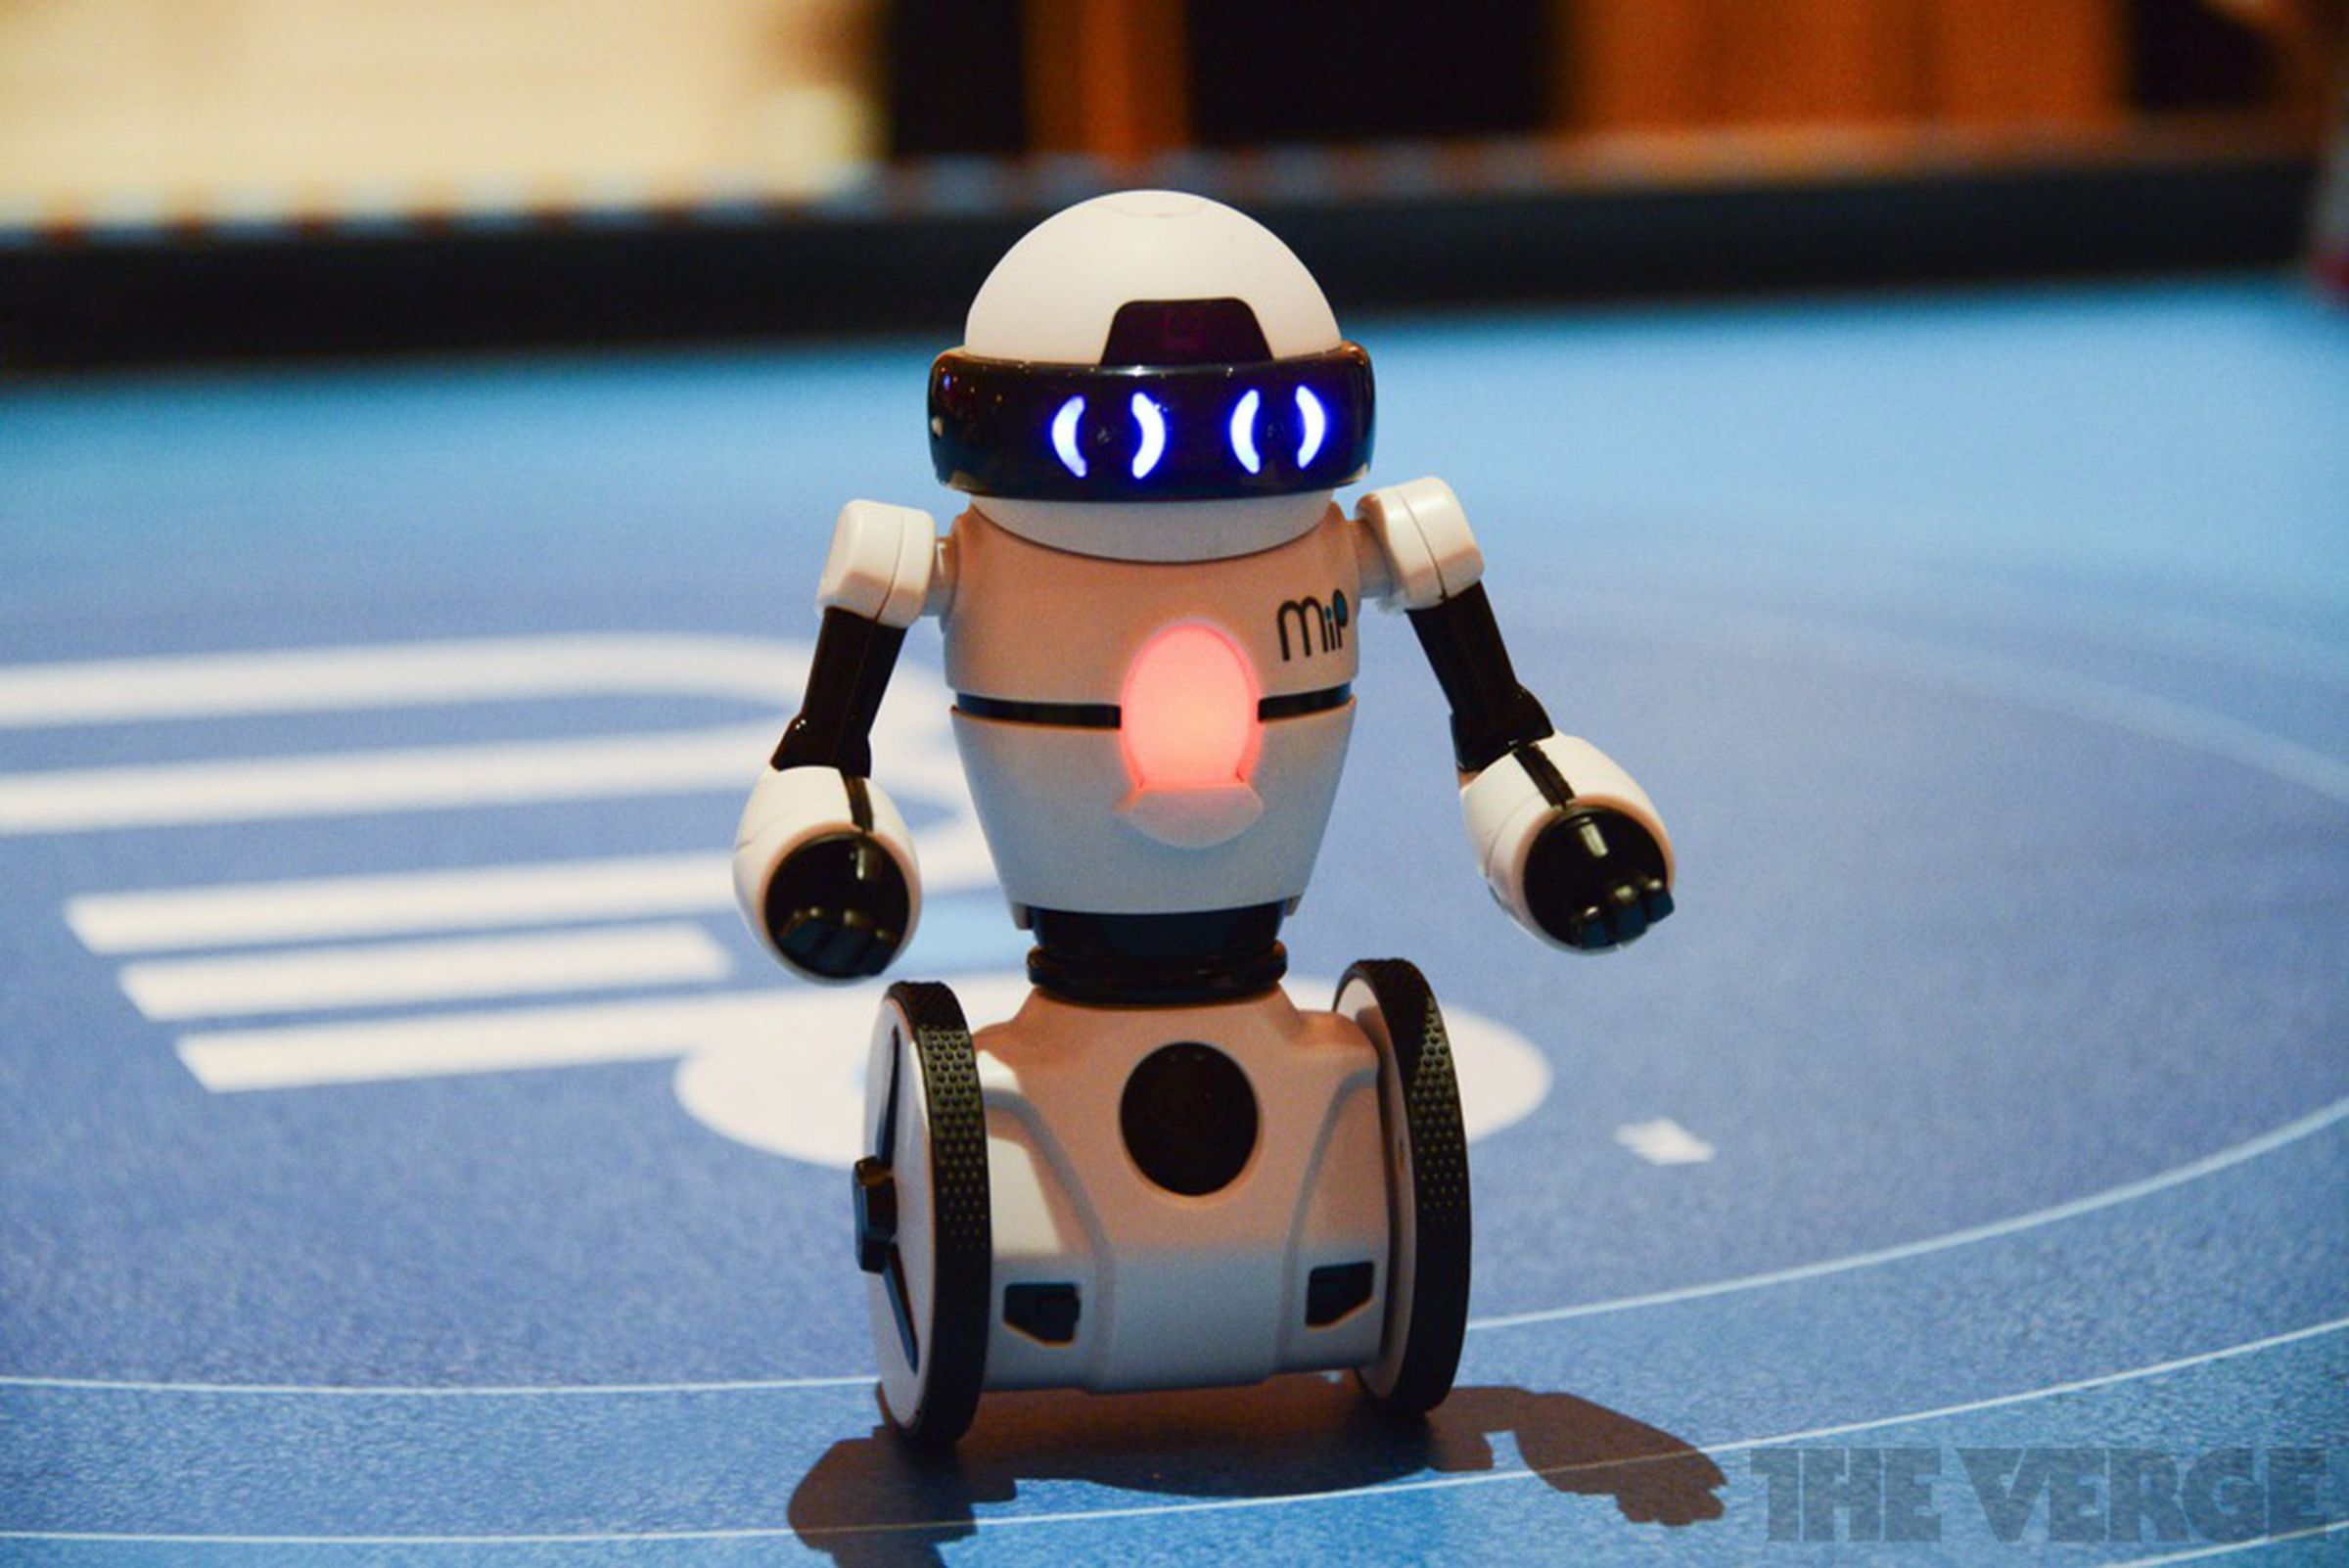 MiP robot hands-on photos